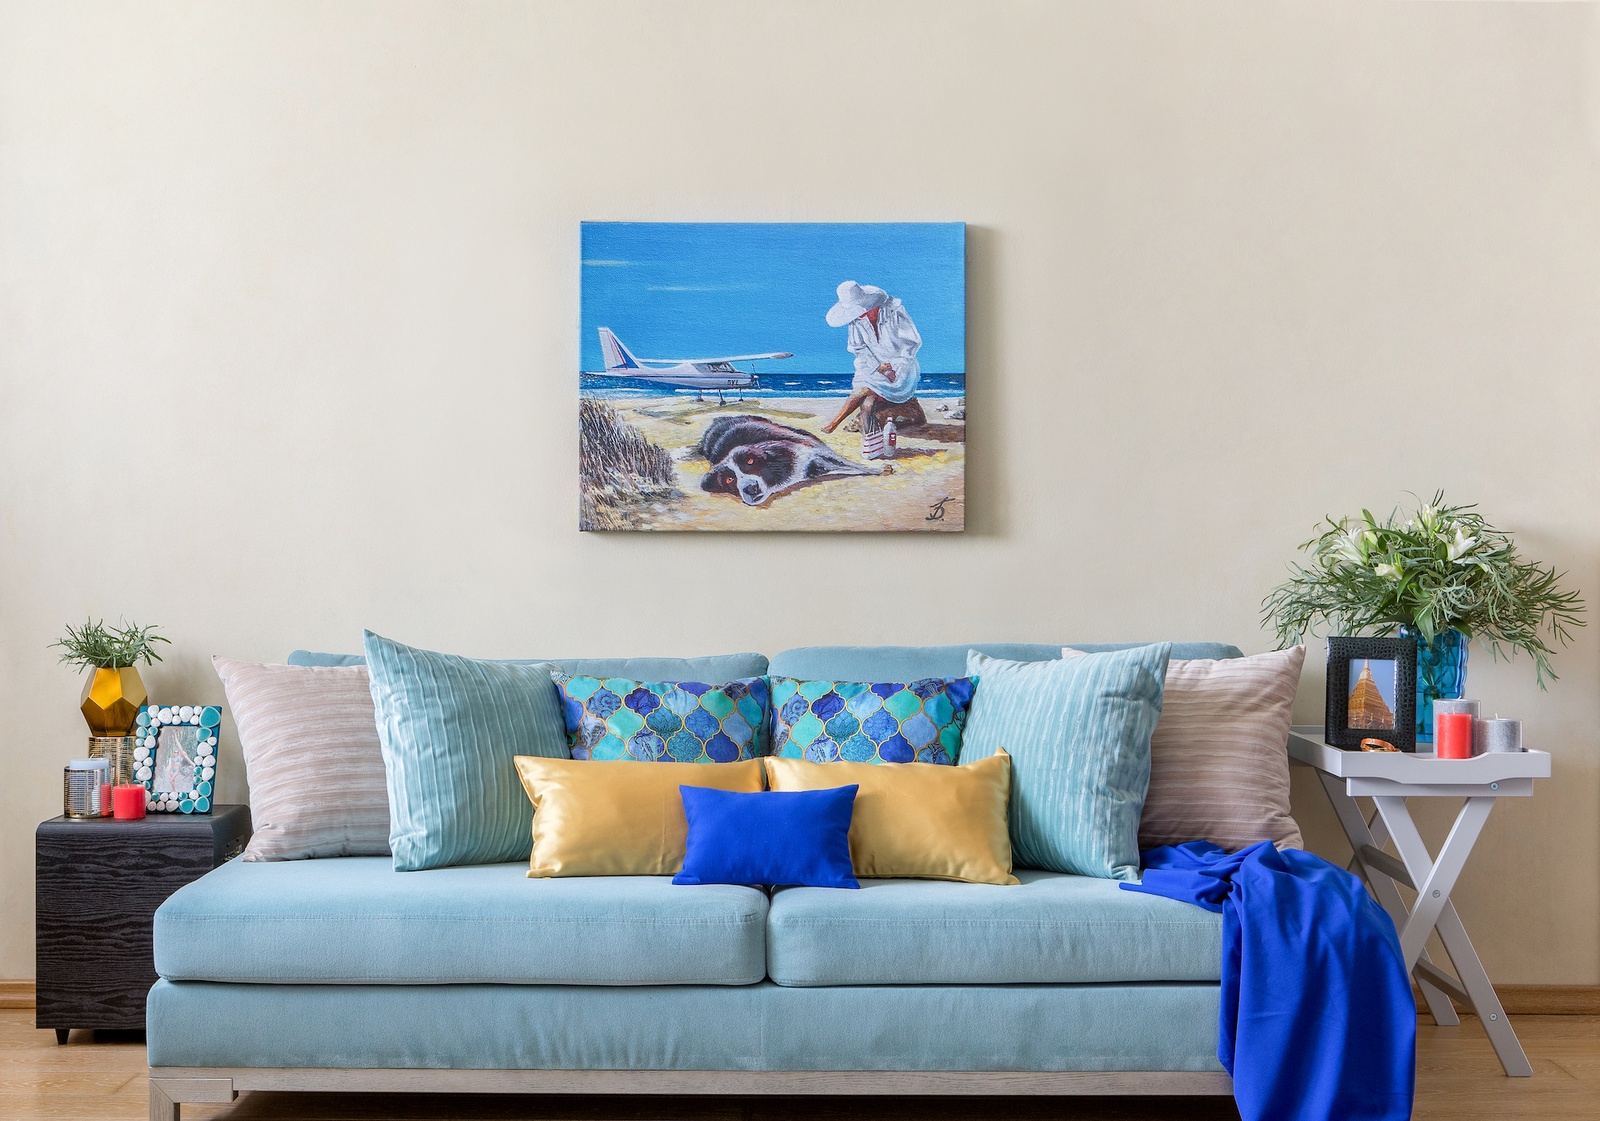 Картина диван. Голубой диван в интерьере. Синяя картина в интерьере. Синий диван в интерьере. Голубой диван с желтыми подушками.